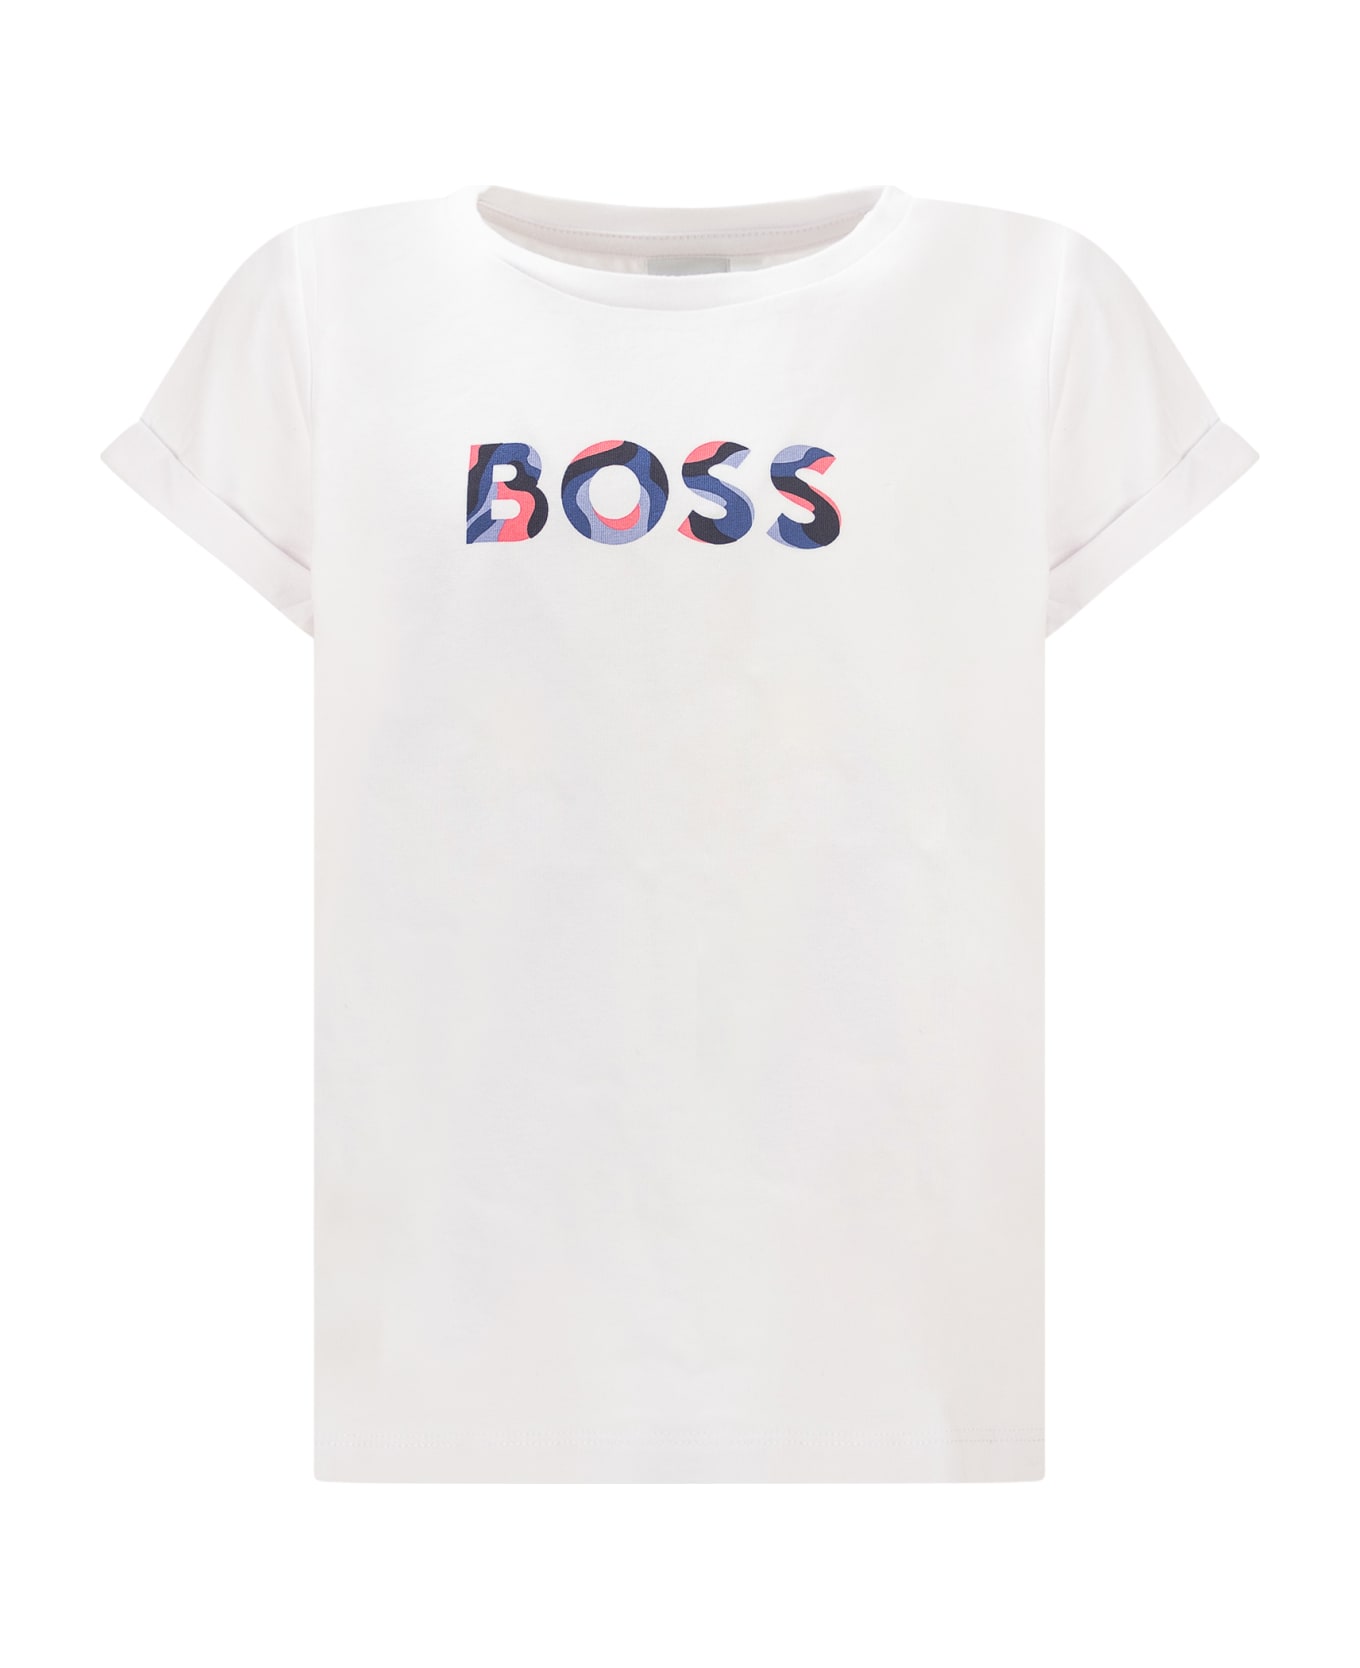 Hugo Boss T-shirt With Print - BIANCO